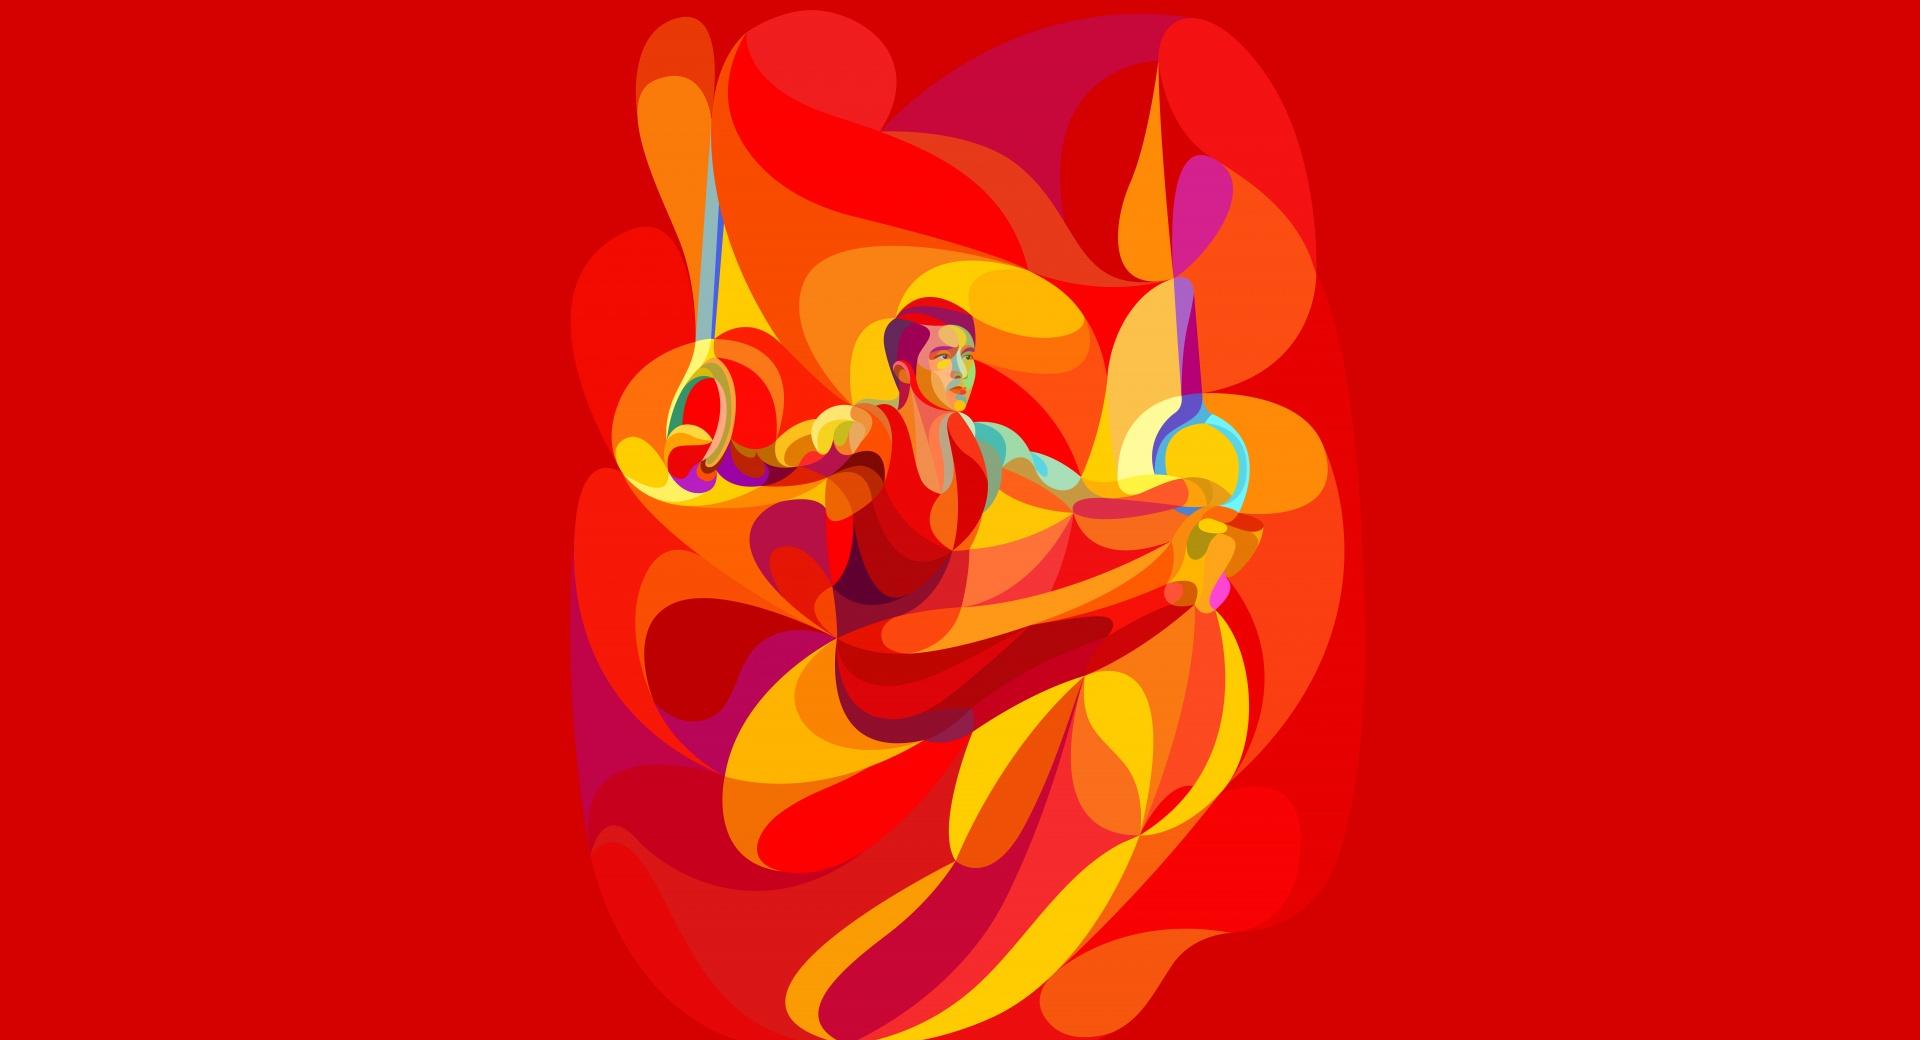 Rio 2016 Olympics Gymnastics wallpapers HD quality